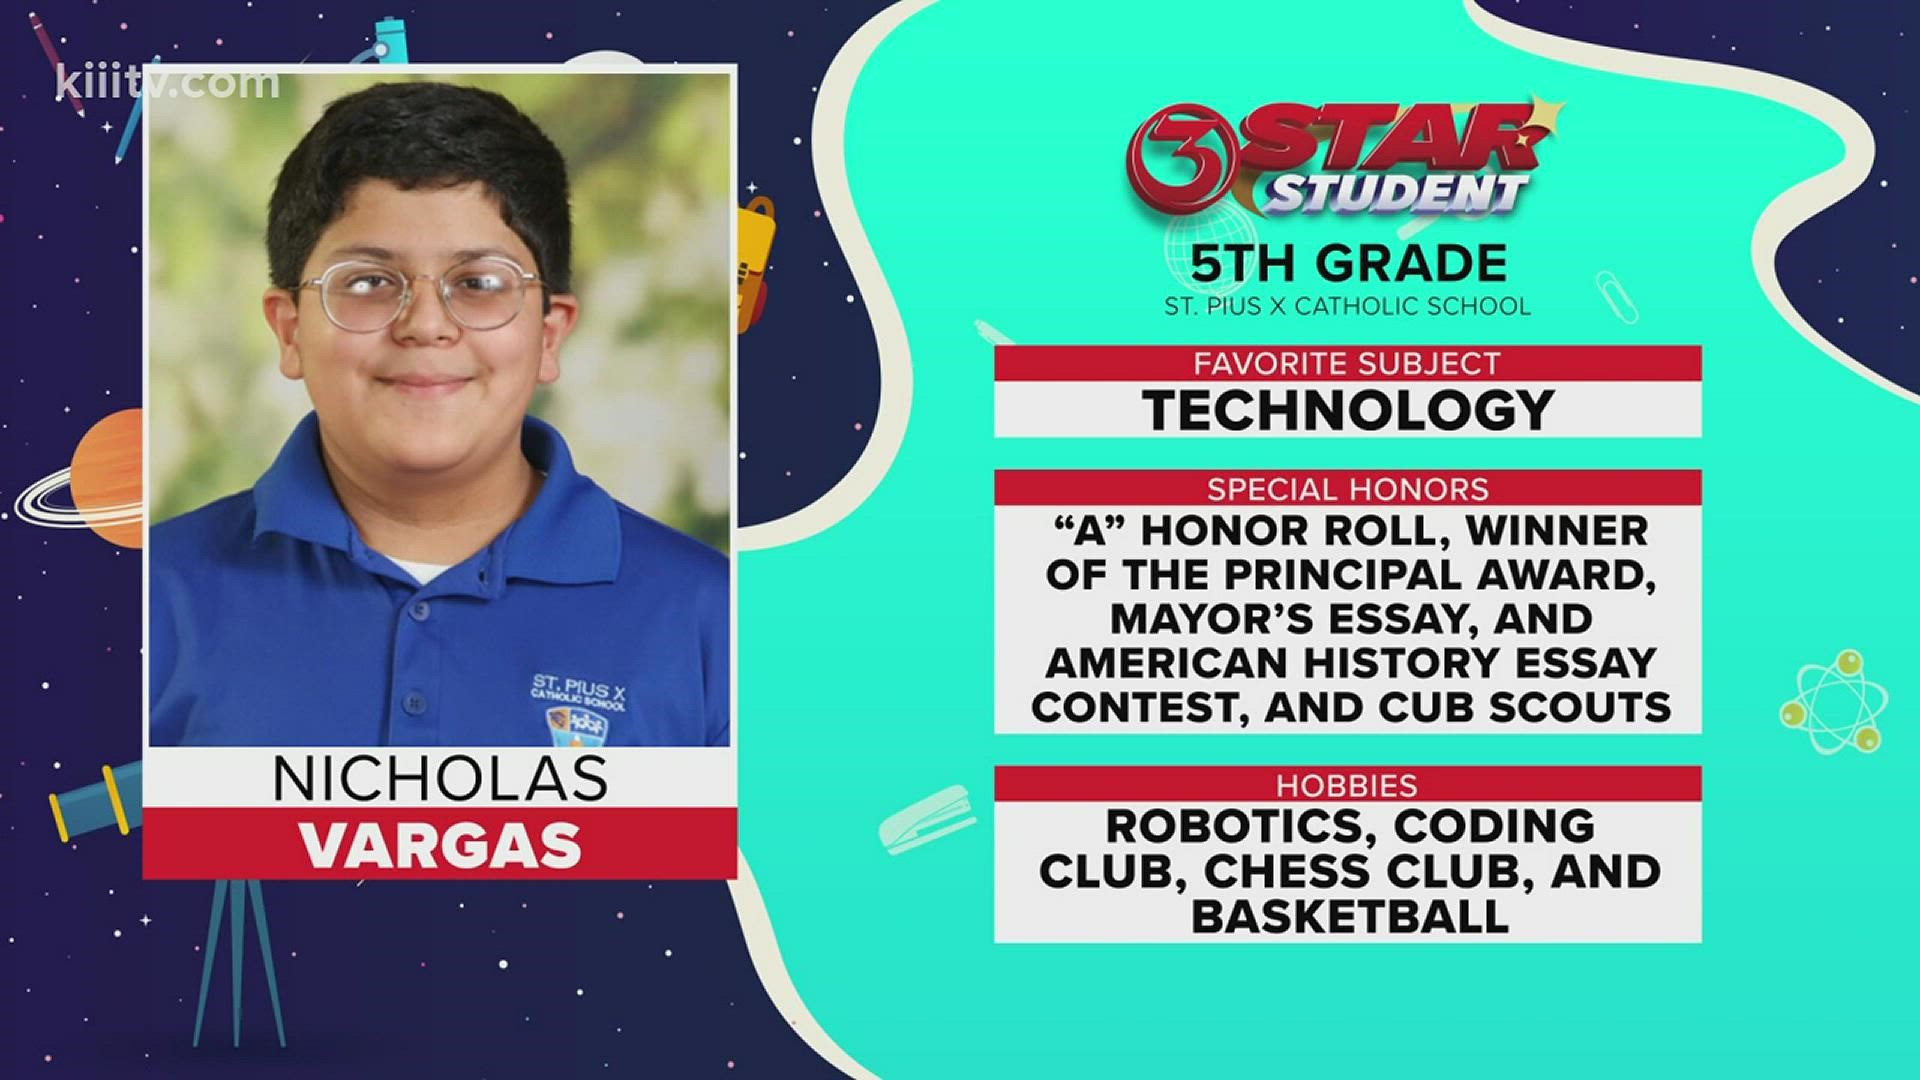 Nicholas Vargas is 5th grader at St. Pius Catholic School!